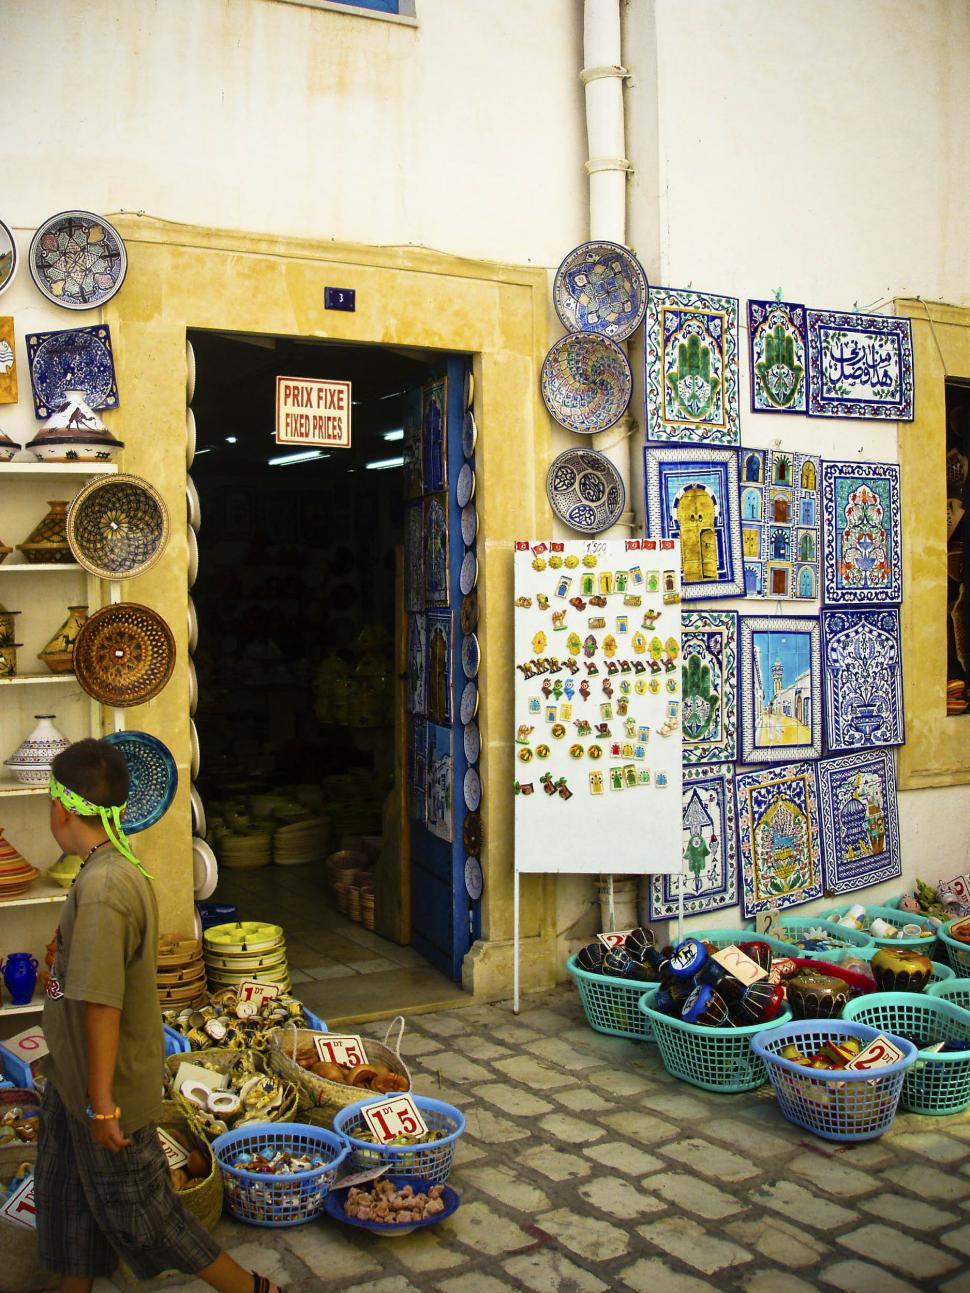 Free Image of Souvenir Shop in Tunisia 